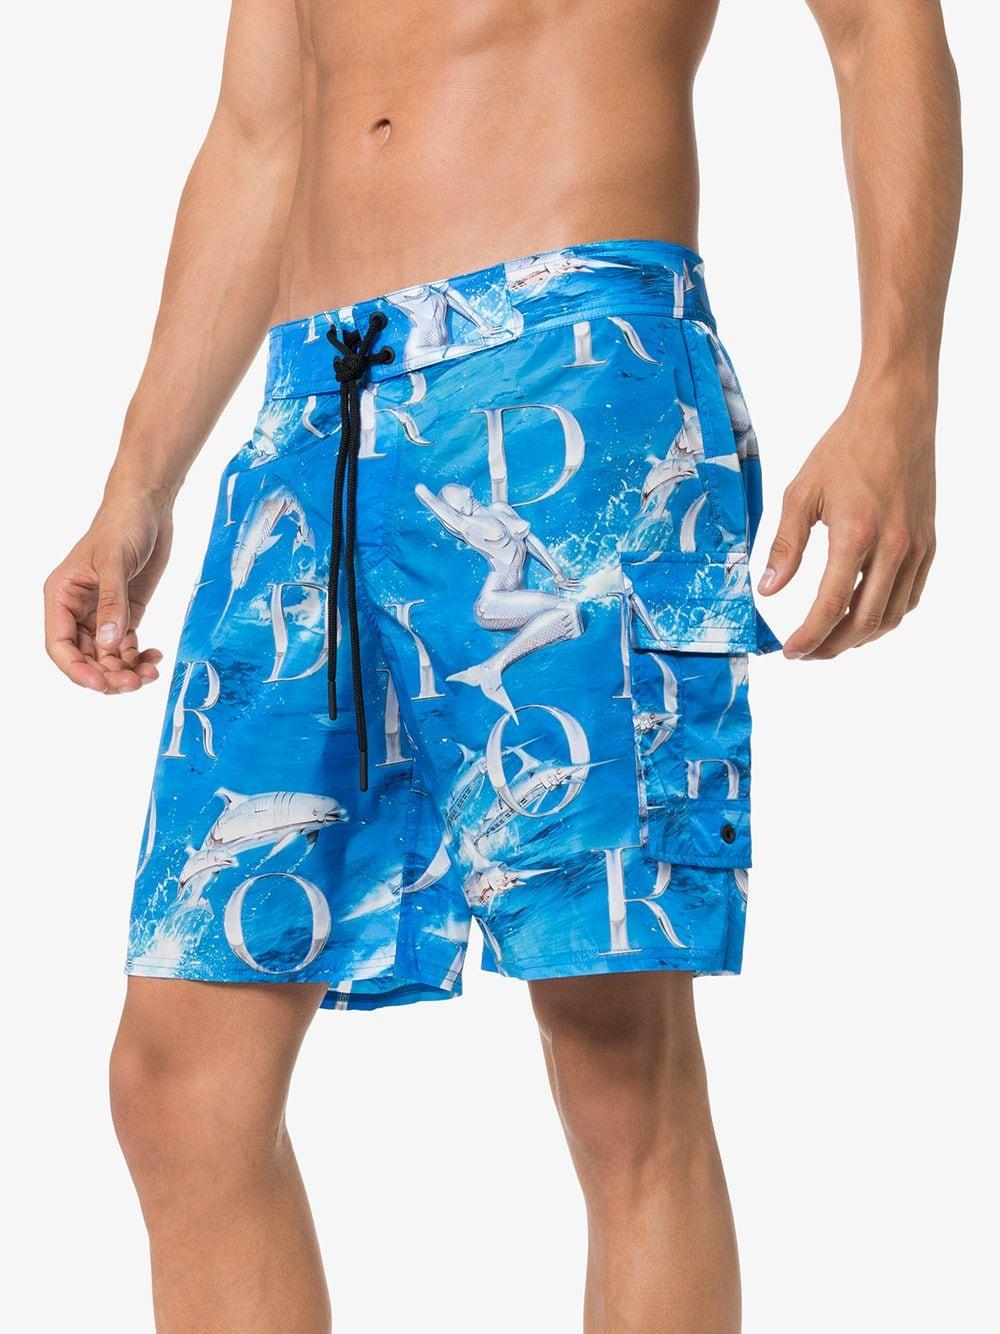 Dior Homme Synthetic Sorayama Logo Print Swim Shorts in Blue for Men - Lyst